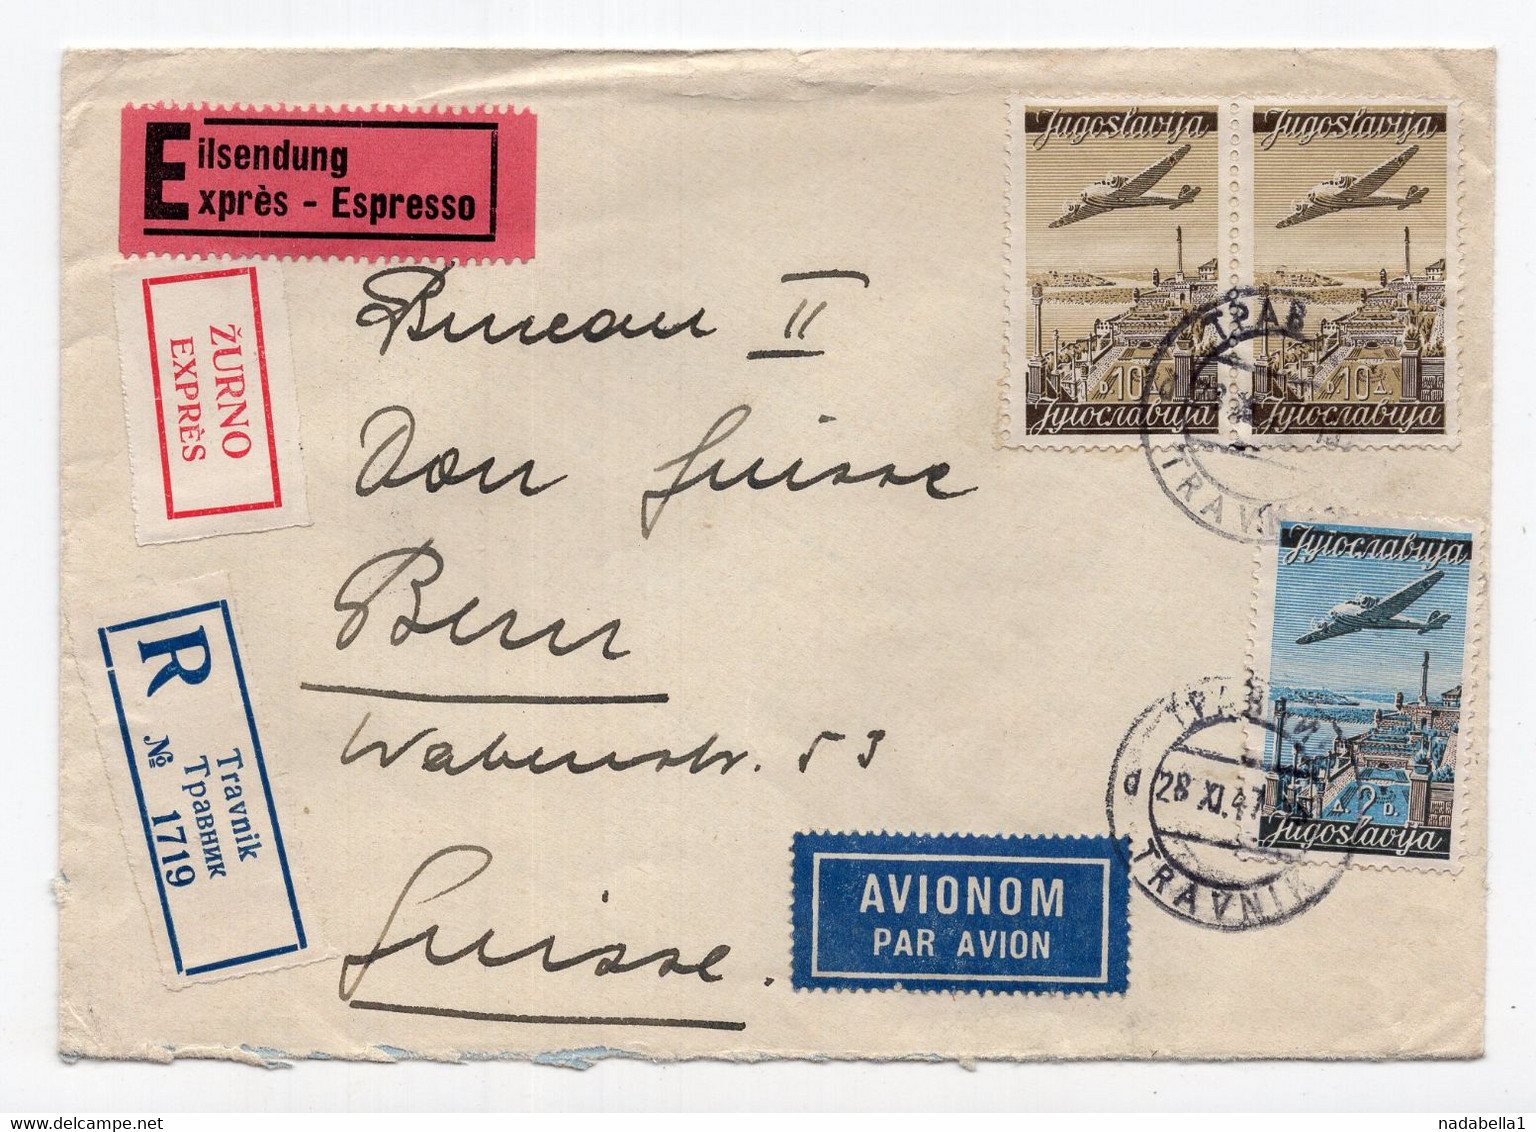 1947. YUGOSLAVIA,BOSNIA,BIH,TRAVNIK TO SWITZERLAND,AIRMAIL,RECORDED,EXPRESS COVER - Airmail